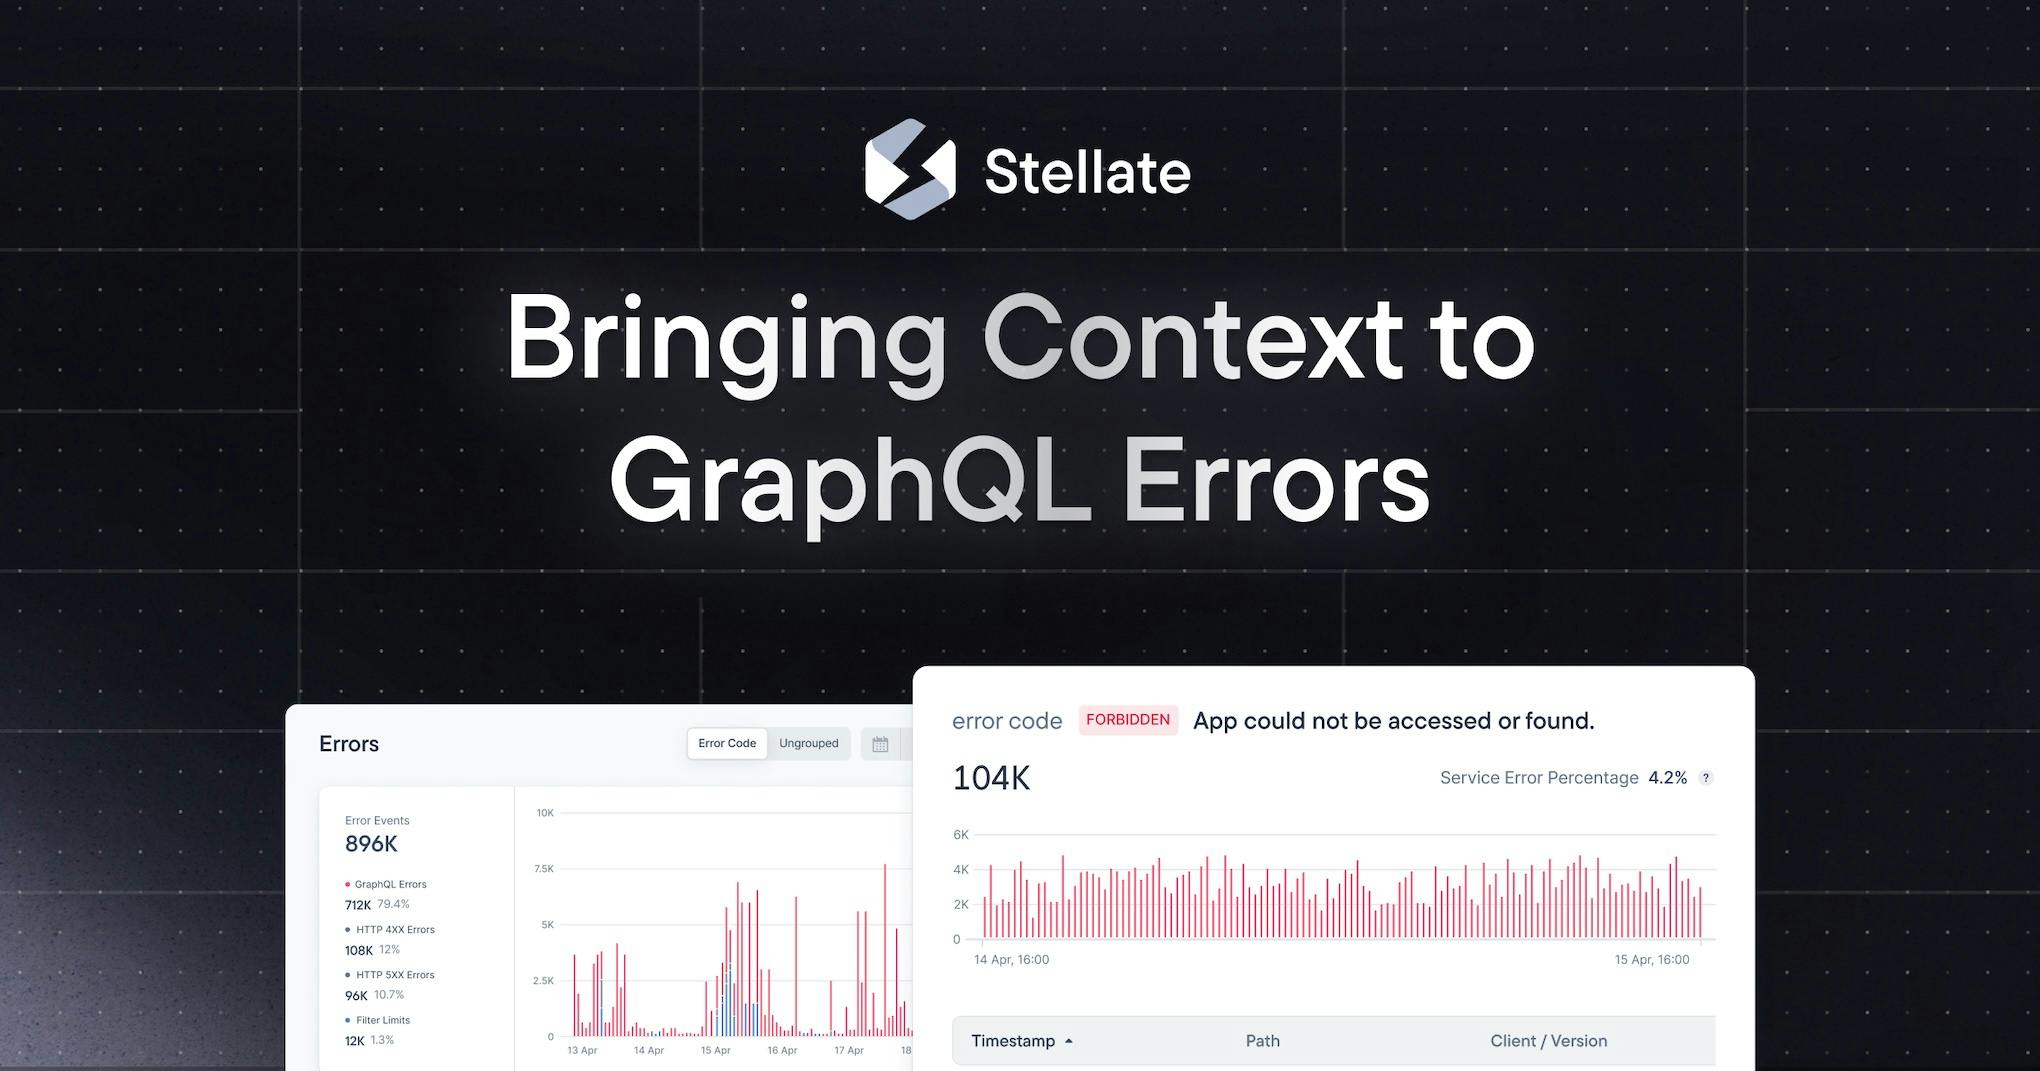 The Best Way to Do GraphQL Error Tracking